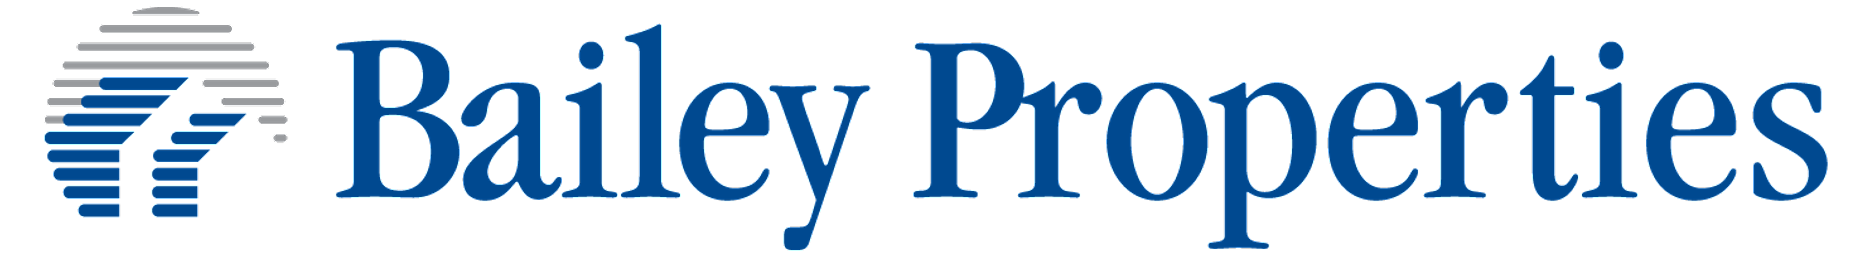 Pat Simmons Logo